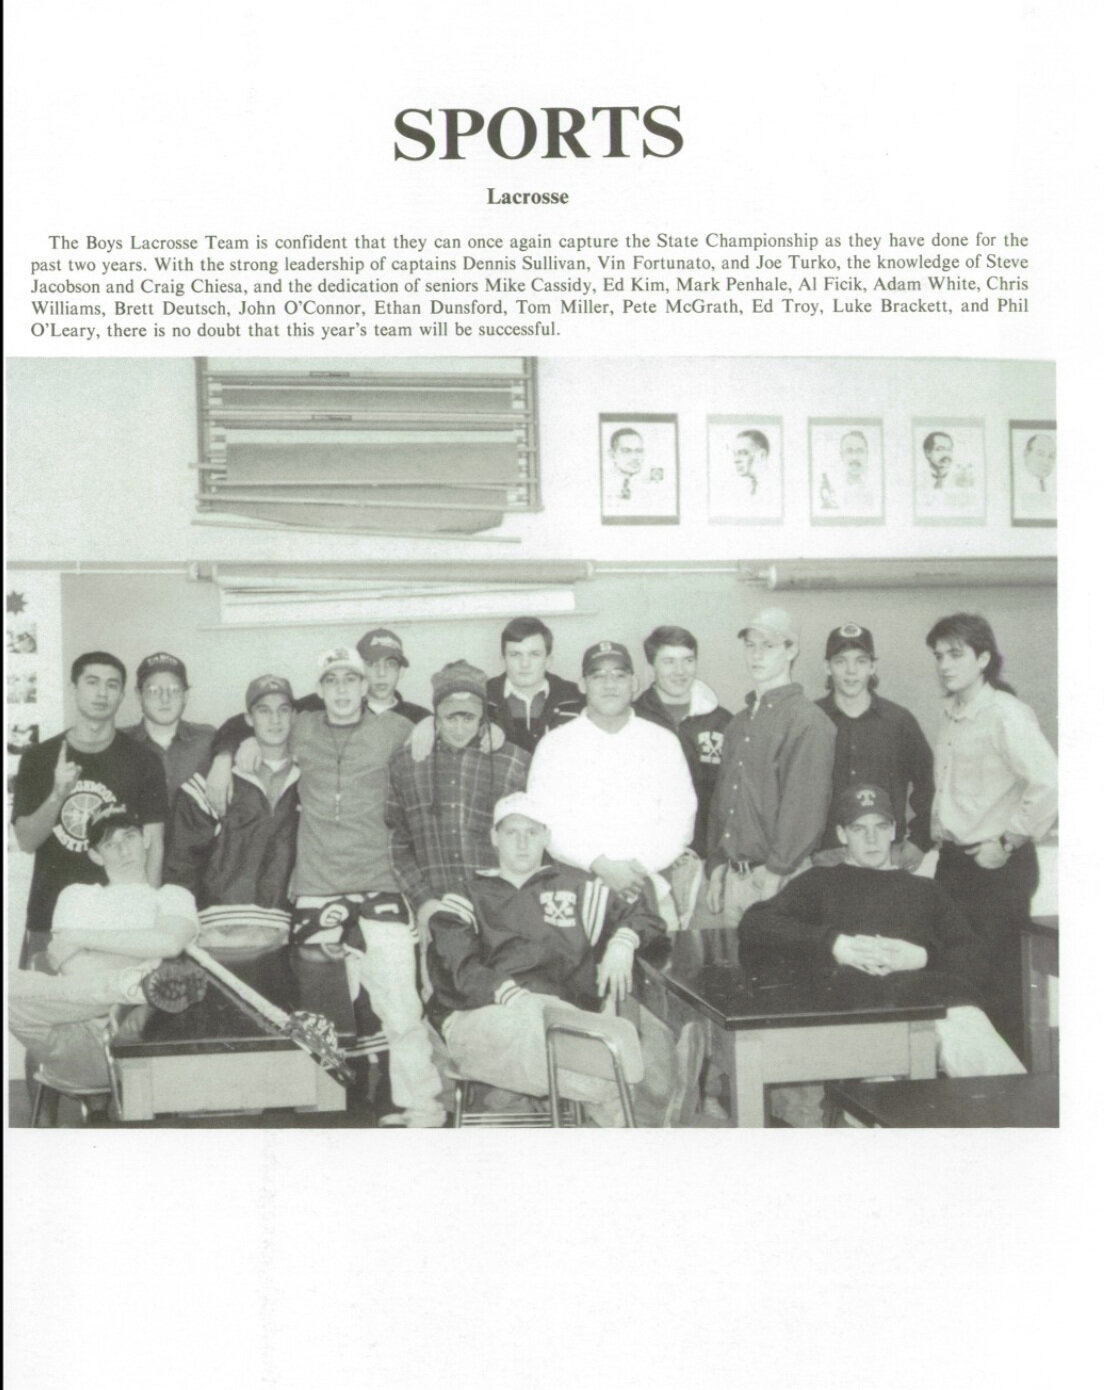 1992 Boys’ Lacrosse Team